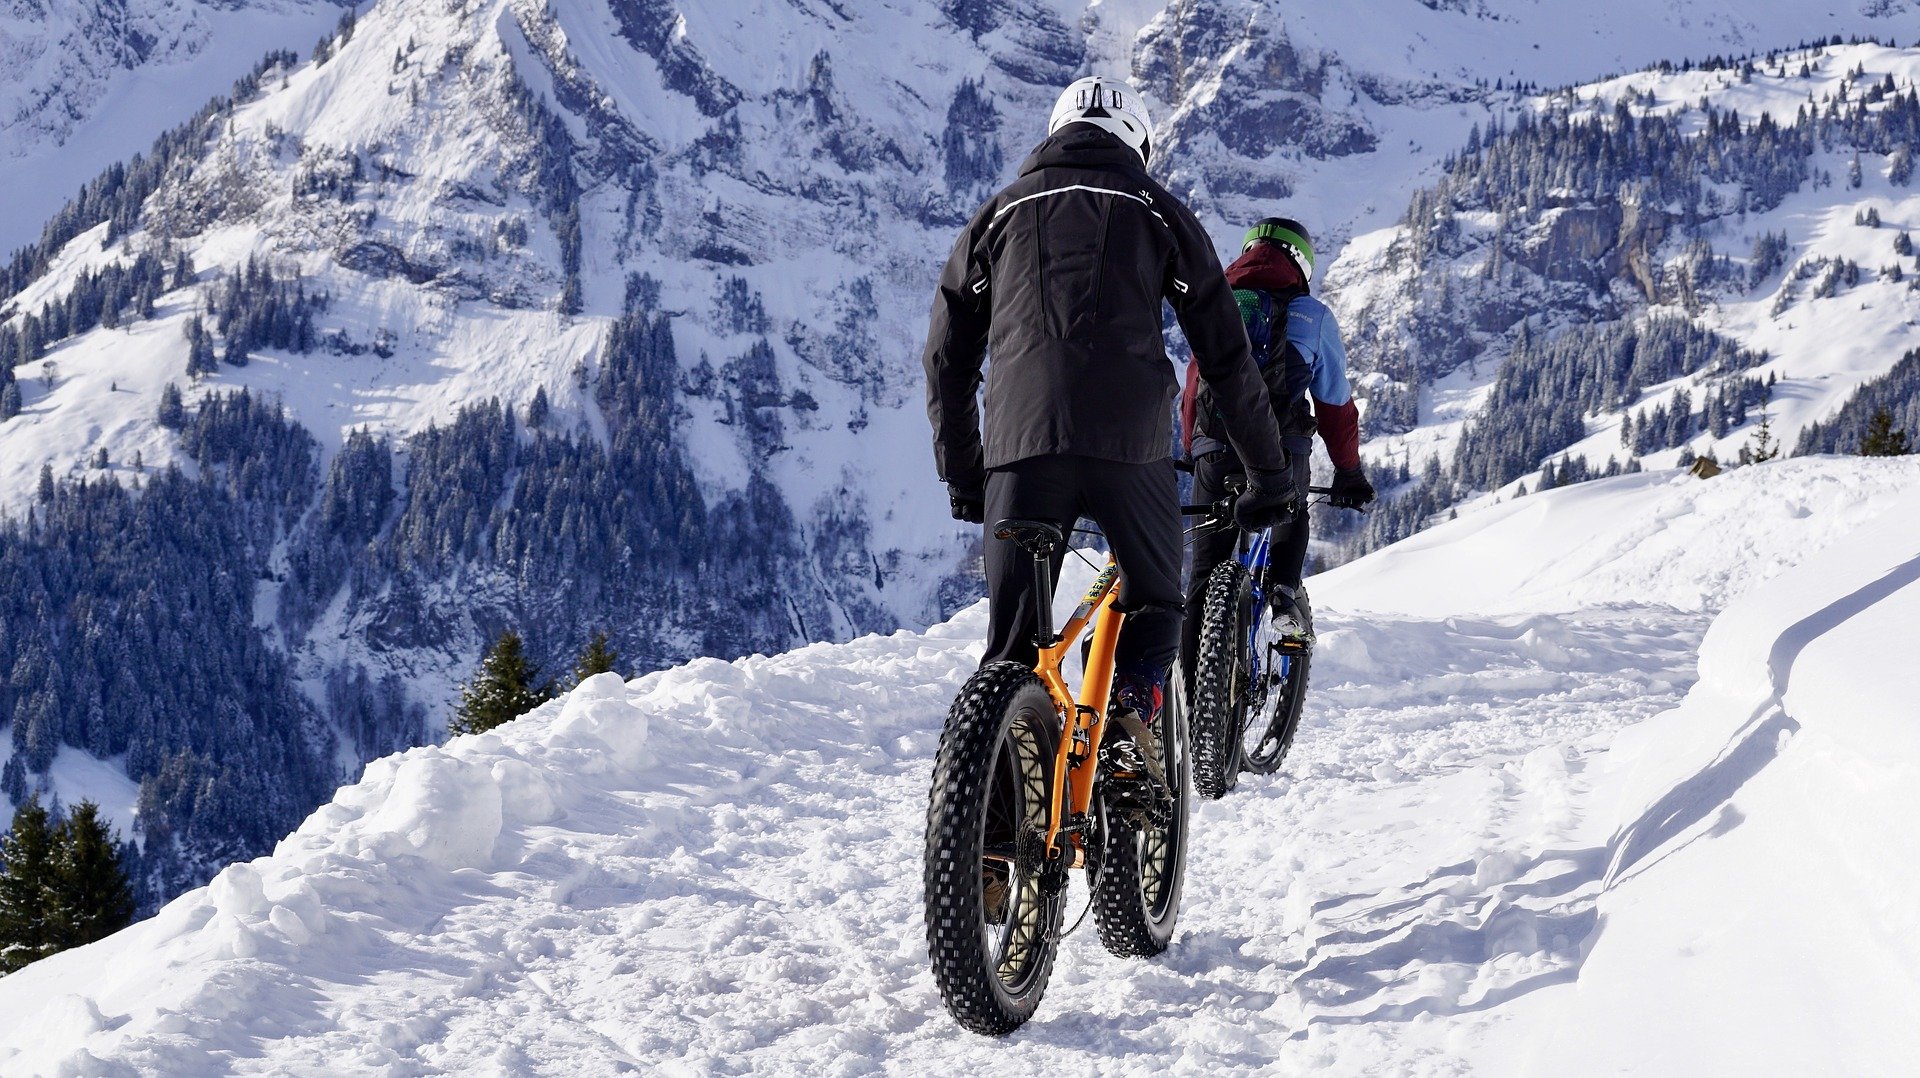 Bike Ride in Snow